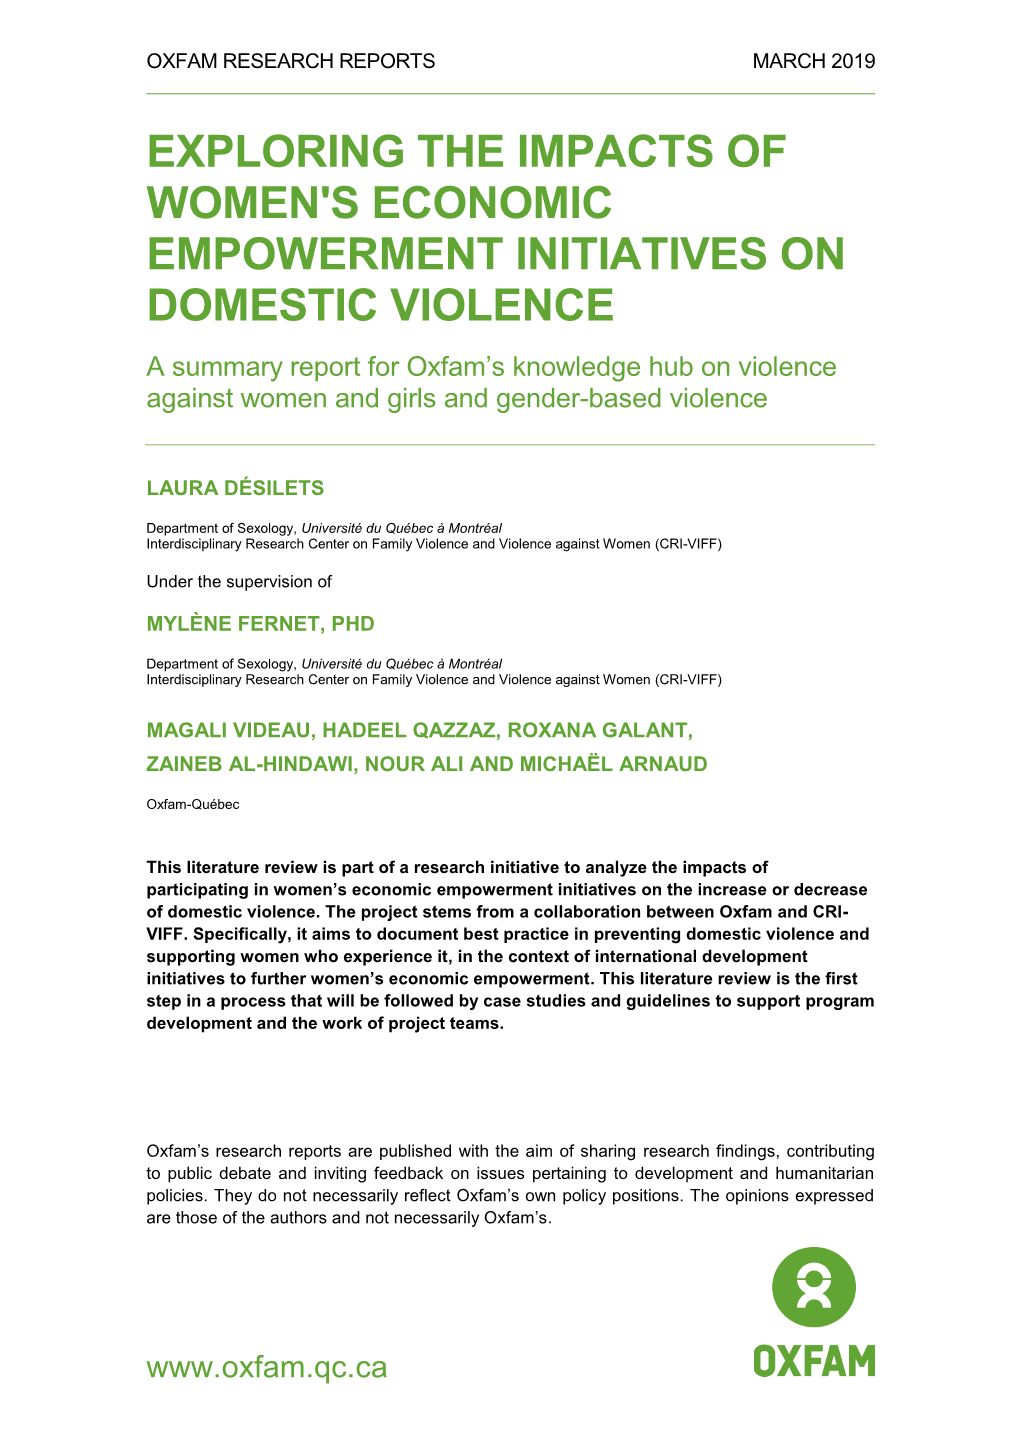 Exploring the Impacts of Women's Economic Empowerment Initiatives